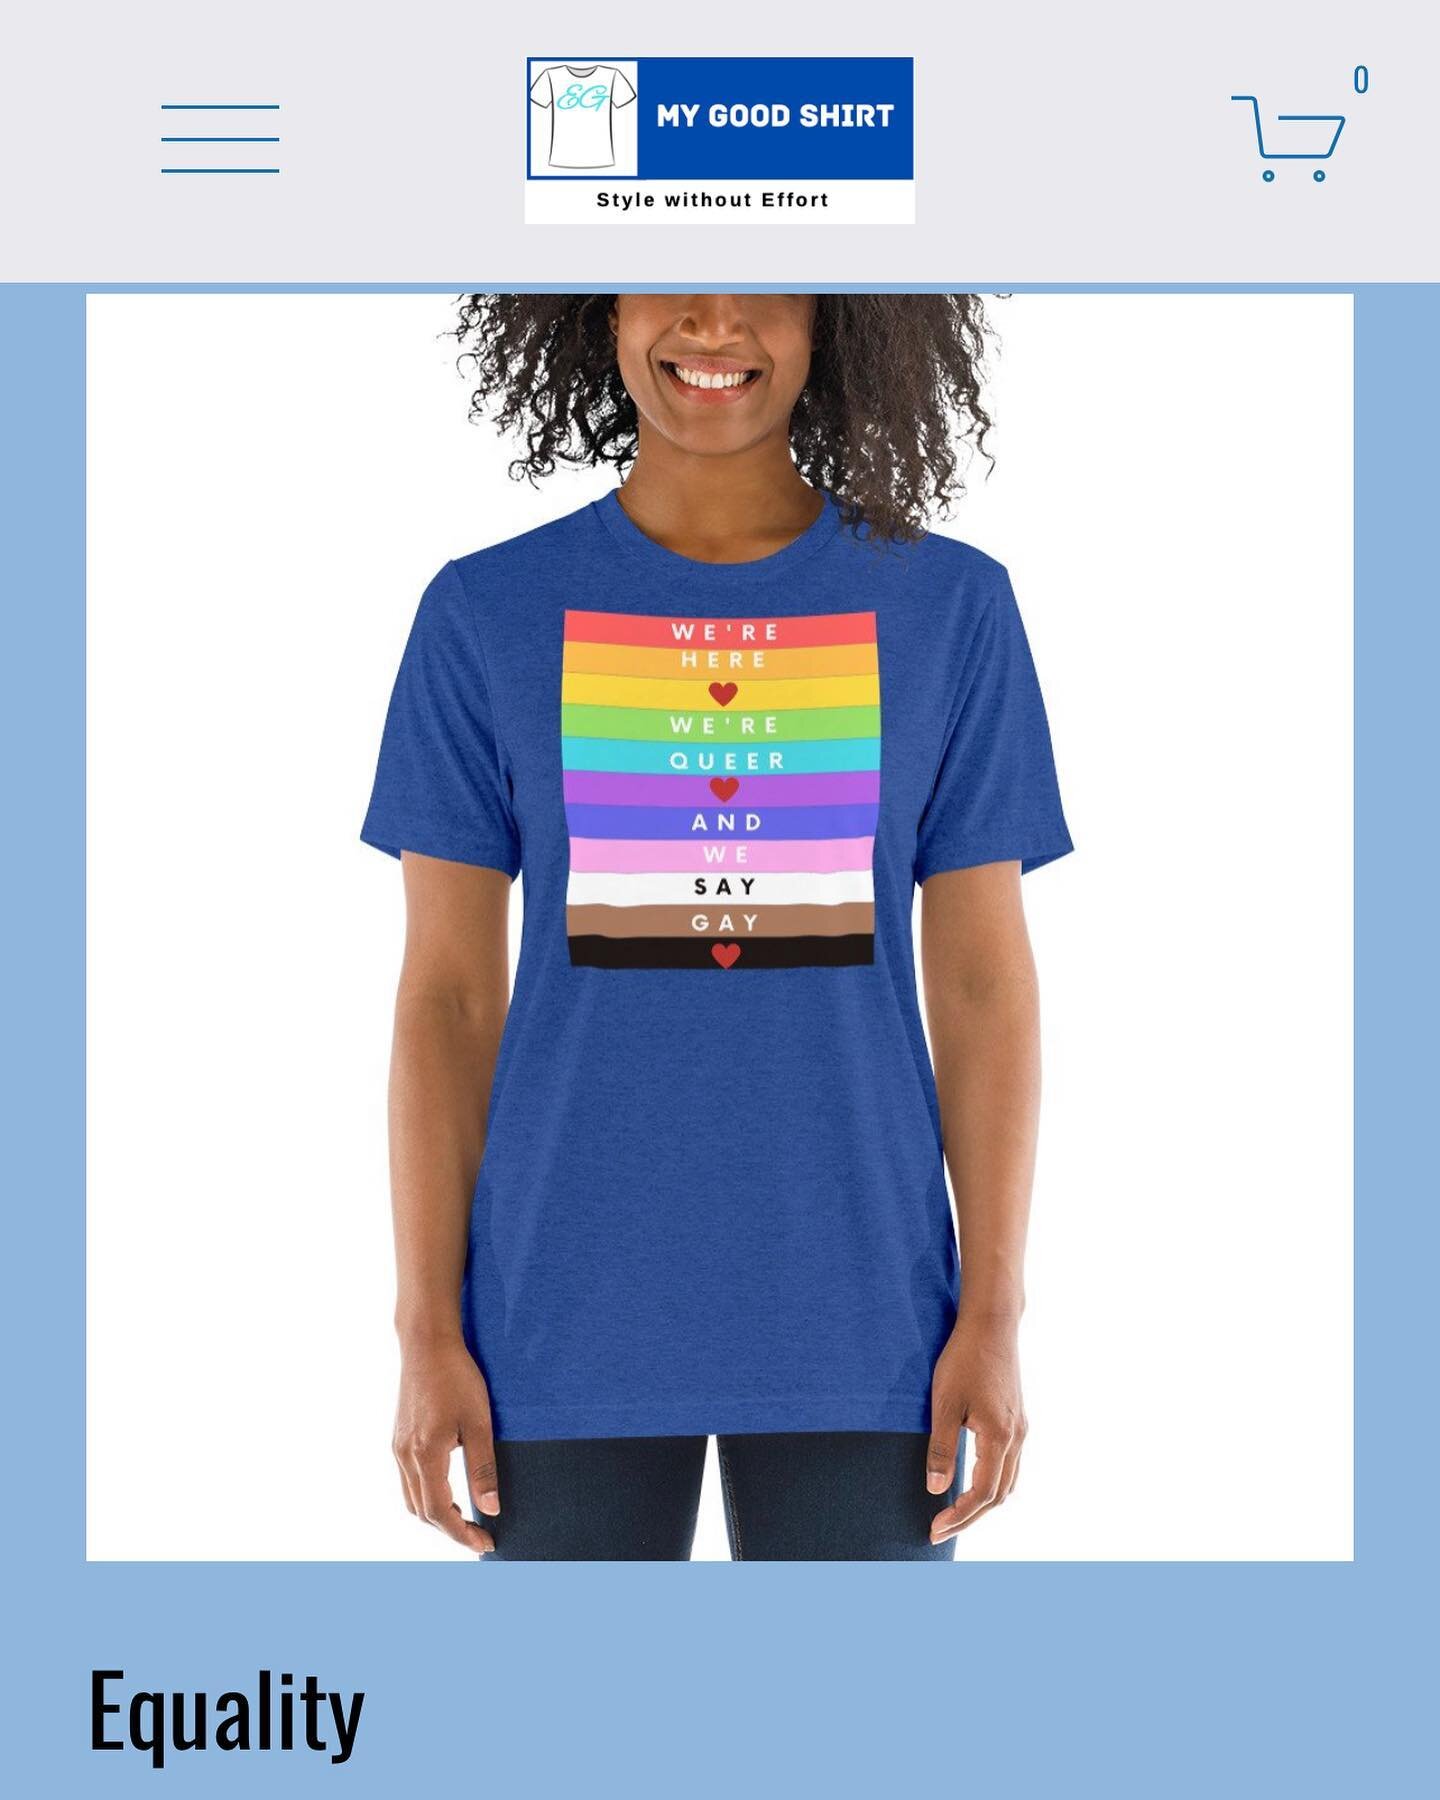 🏳️&zwj;🌈T-shirts, Tanks, Swimsuits🏳️&zwj;🌈Customizable #pride #lgbtowned #lgbt #onlinebusiness. www.mygoodshirt.shop